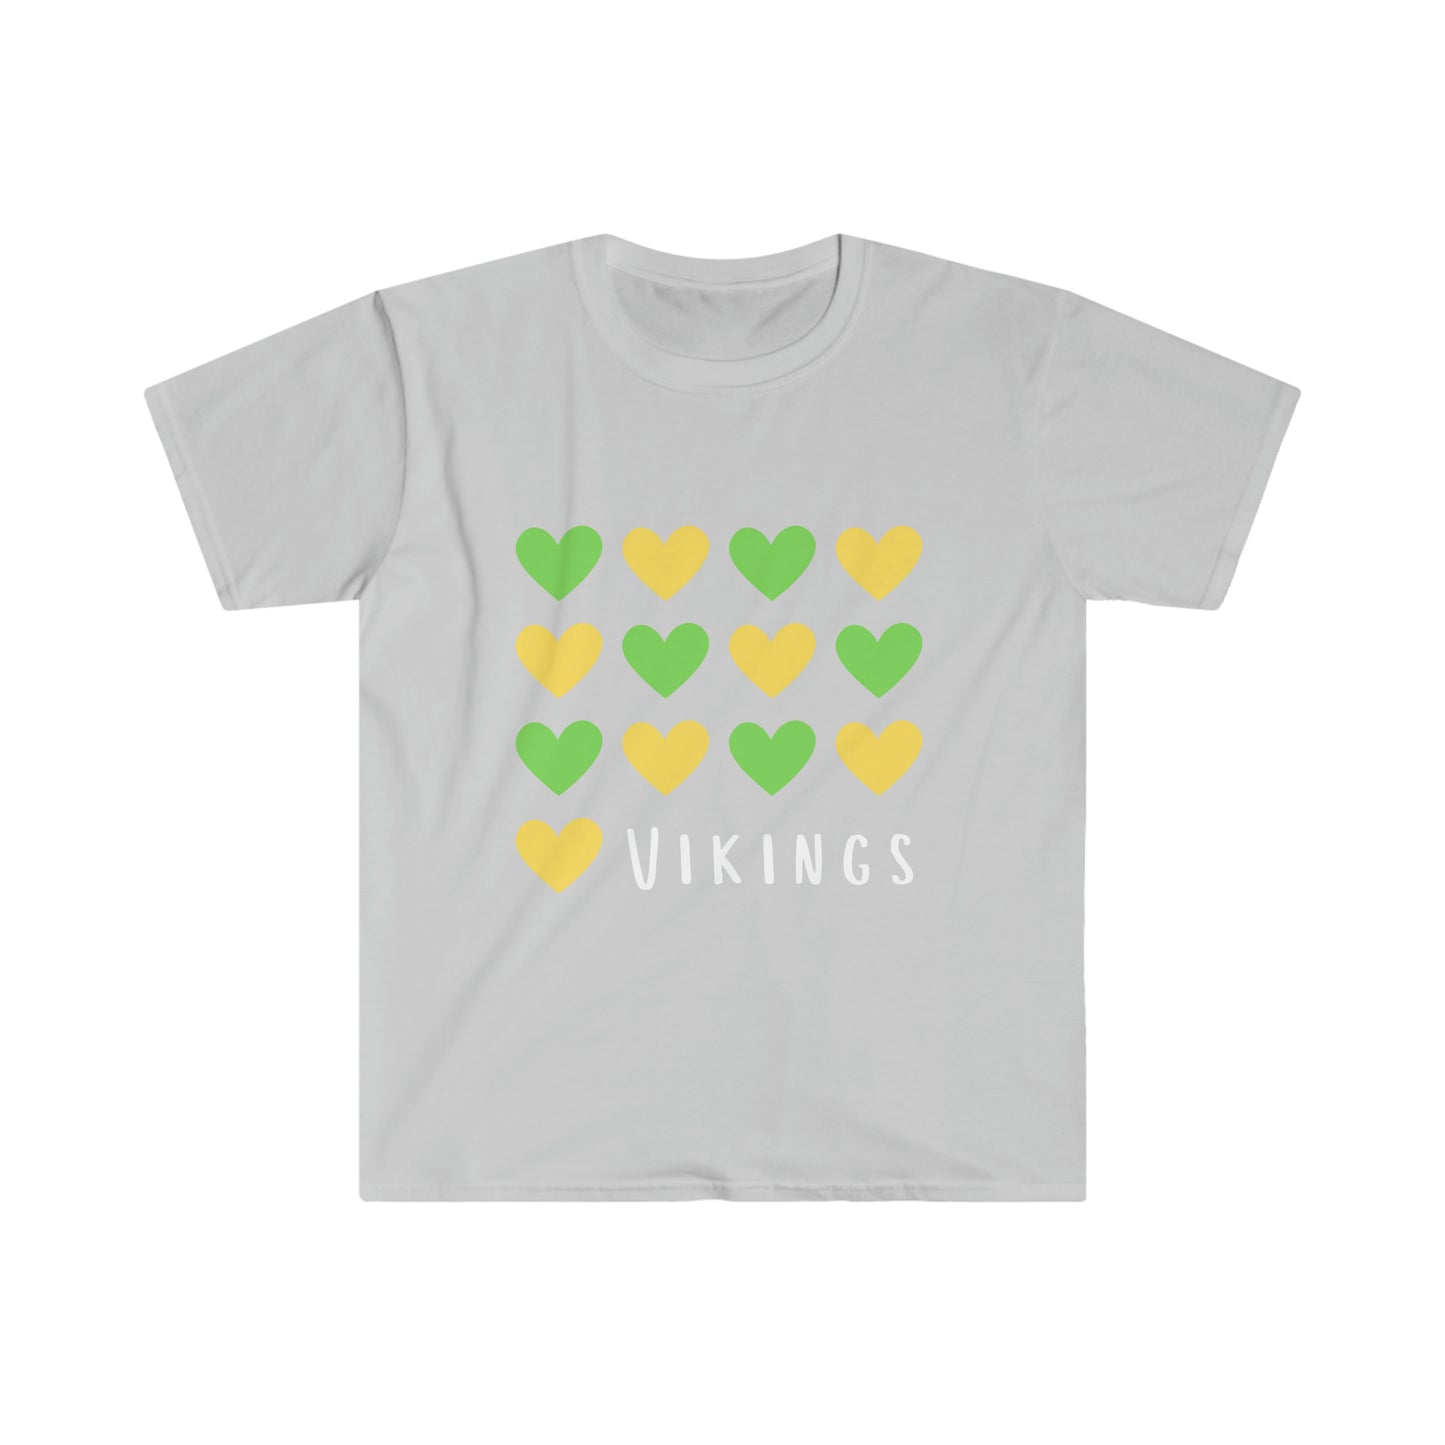 I HEART Vikings - Adult T-Shirt